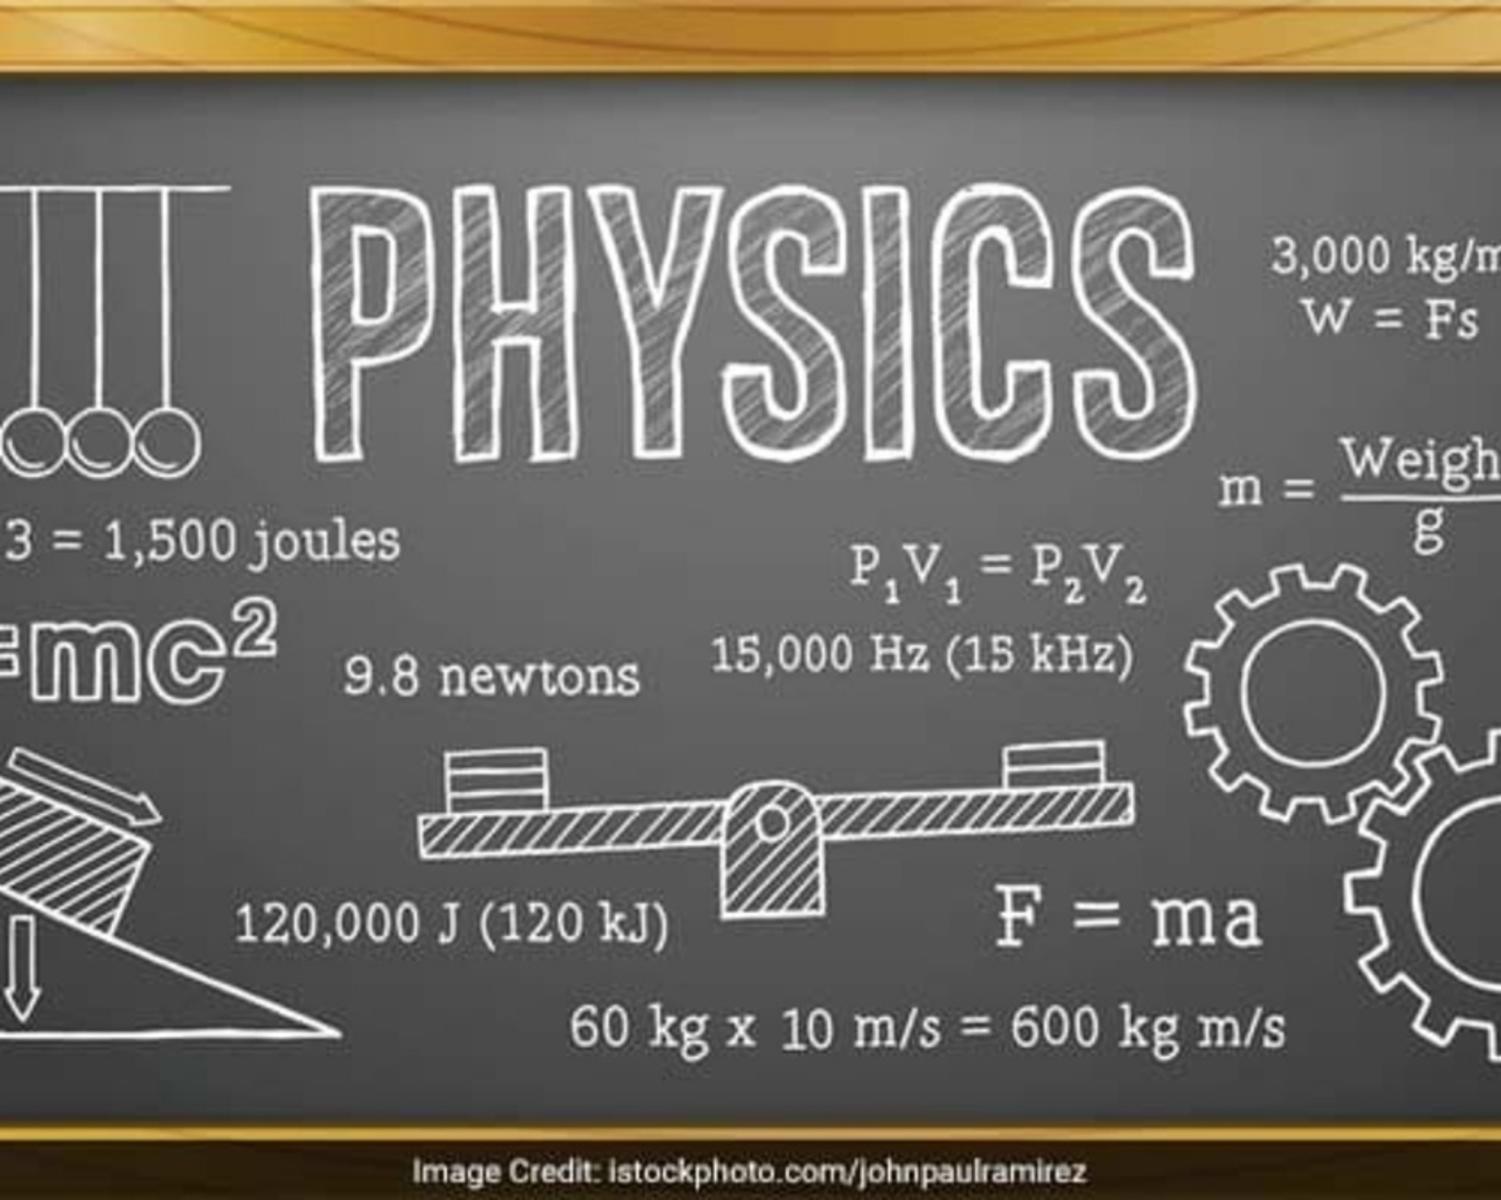 5 reasons to study physics at university?